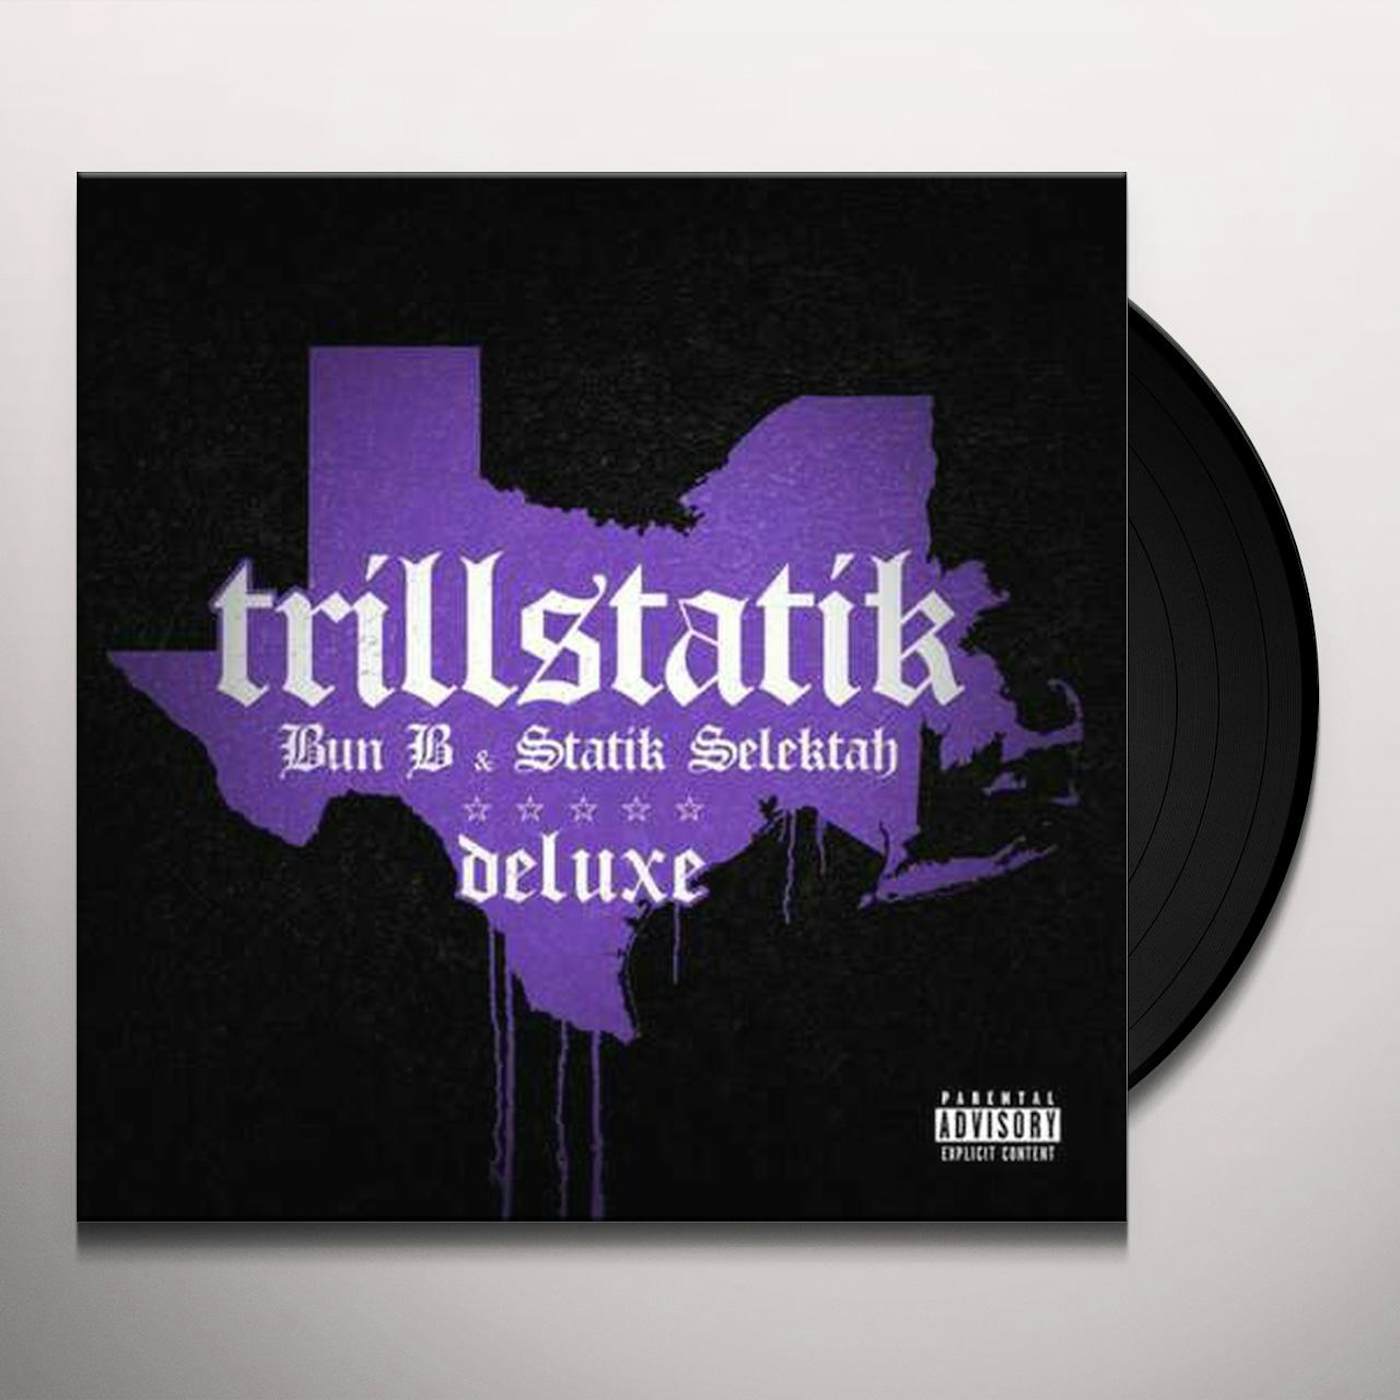 Bun B / Statik Selektah TRILLSTATIK DELUXE Vinyl Record